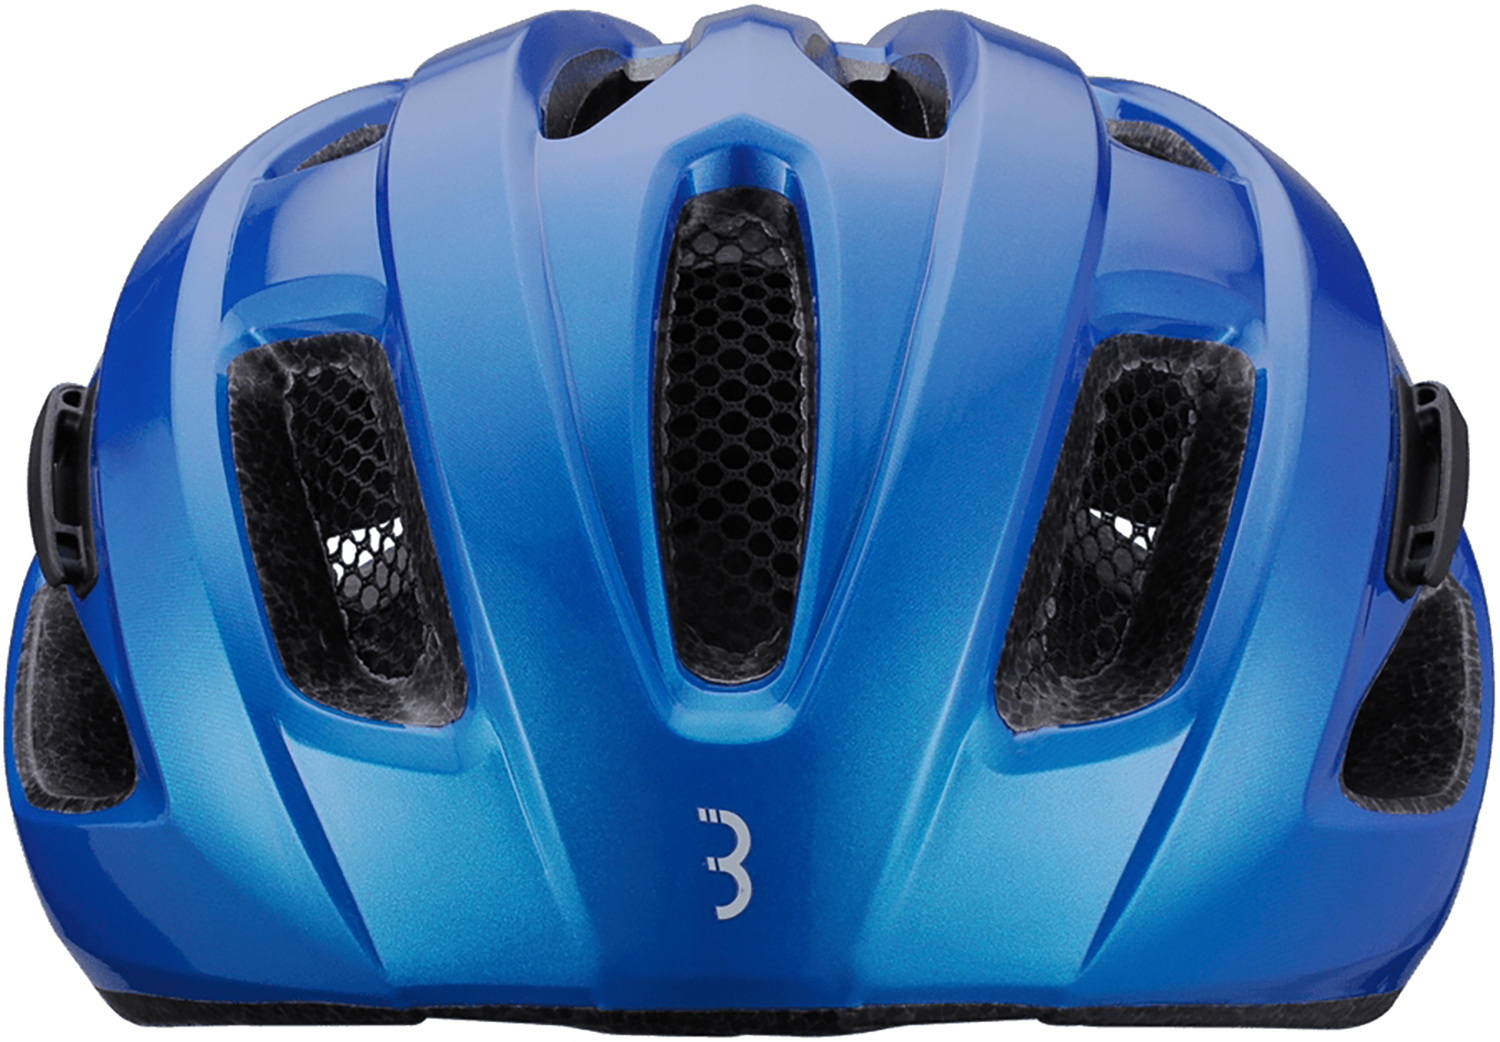 Велошлем BBB Kite 2,0 Glossy Blue